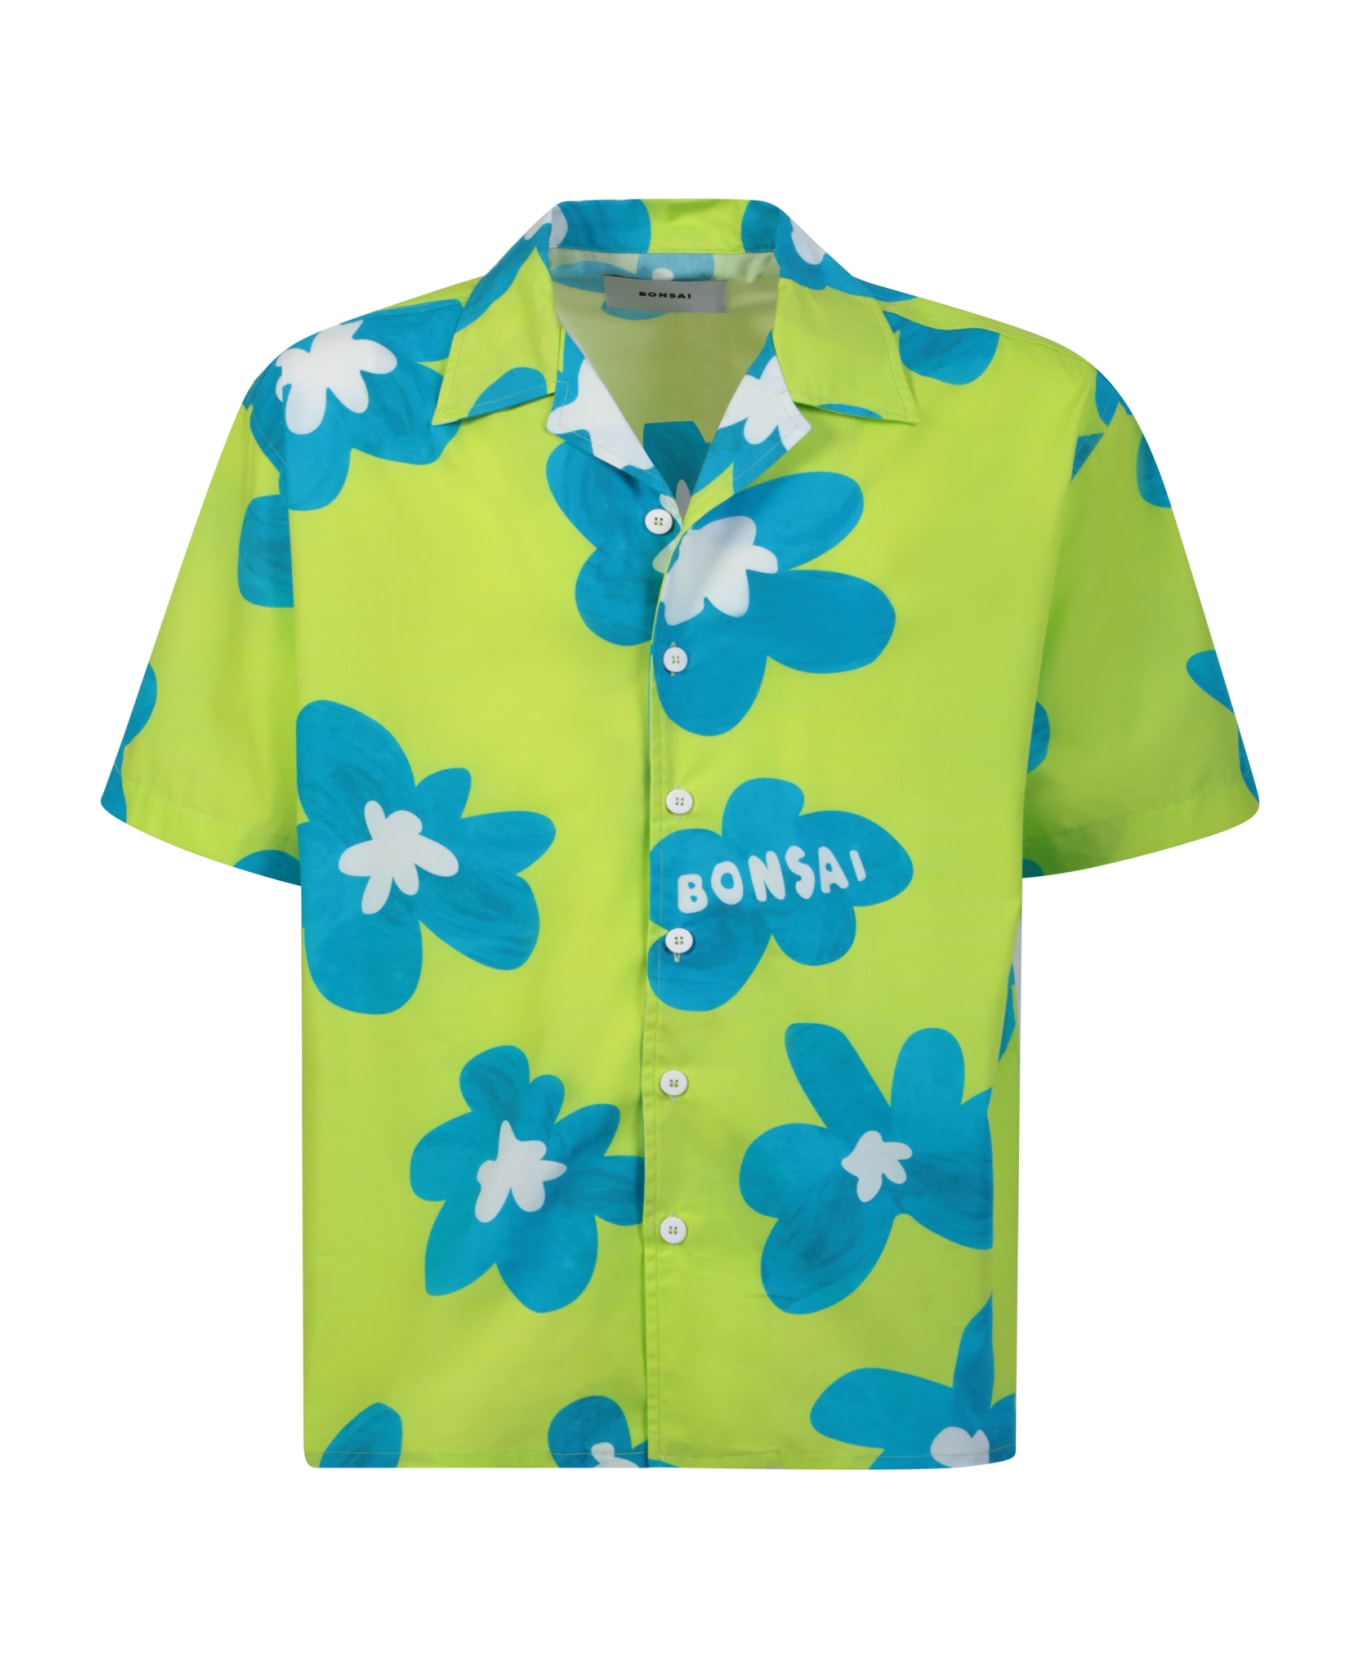 Bonsai Floral Print Lime Green/blue Bowling Shirt - Green